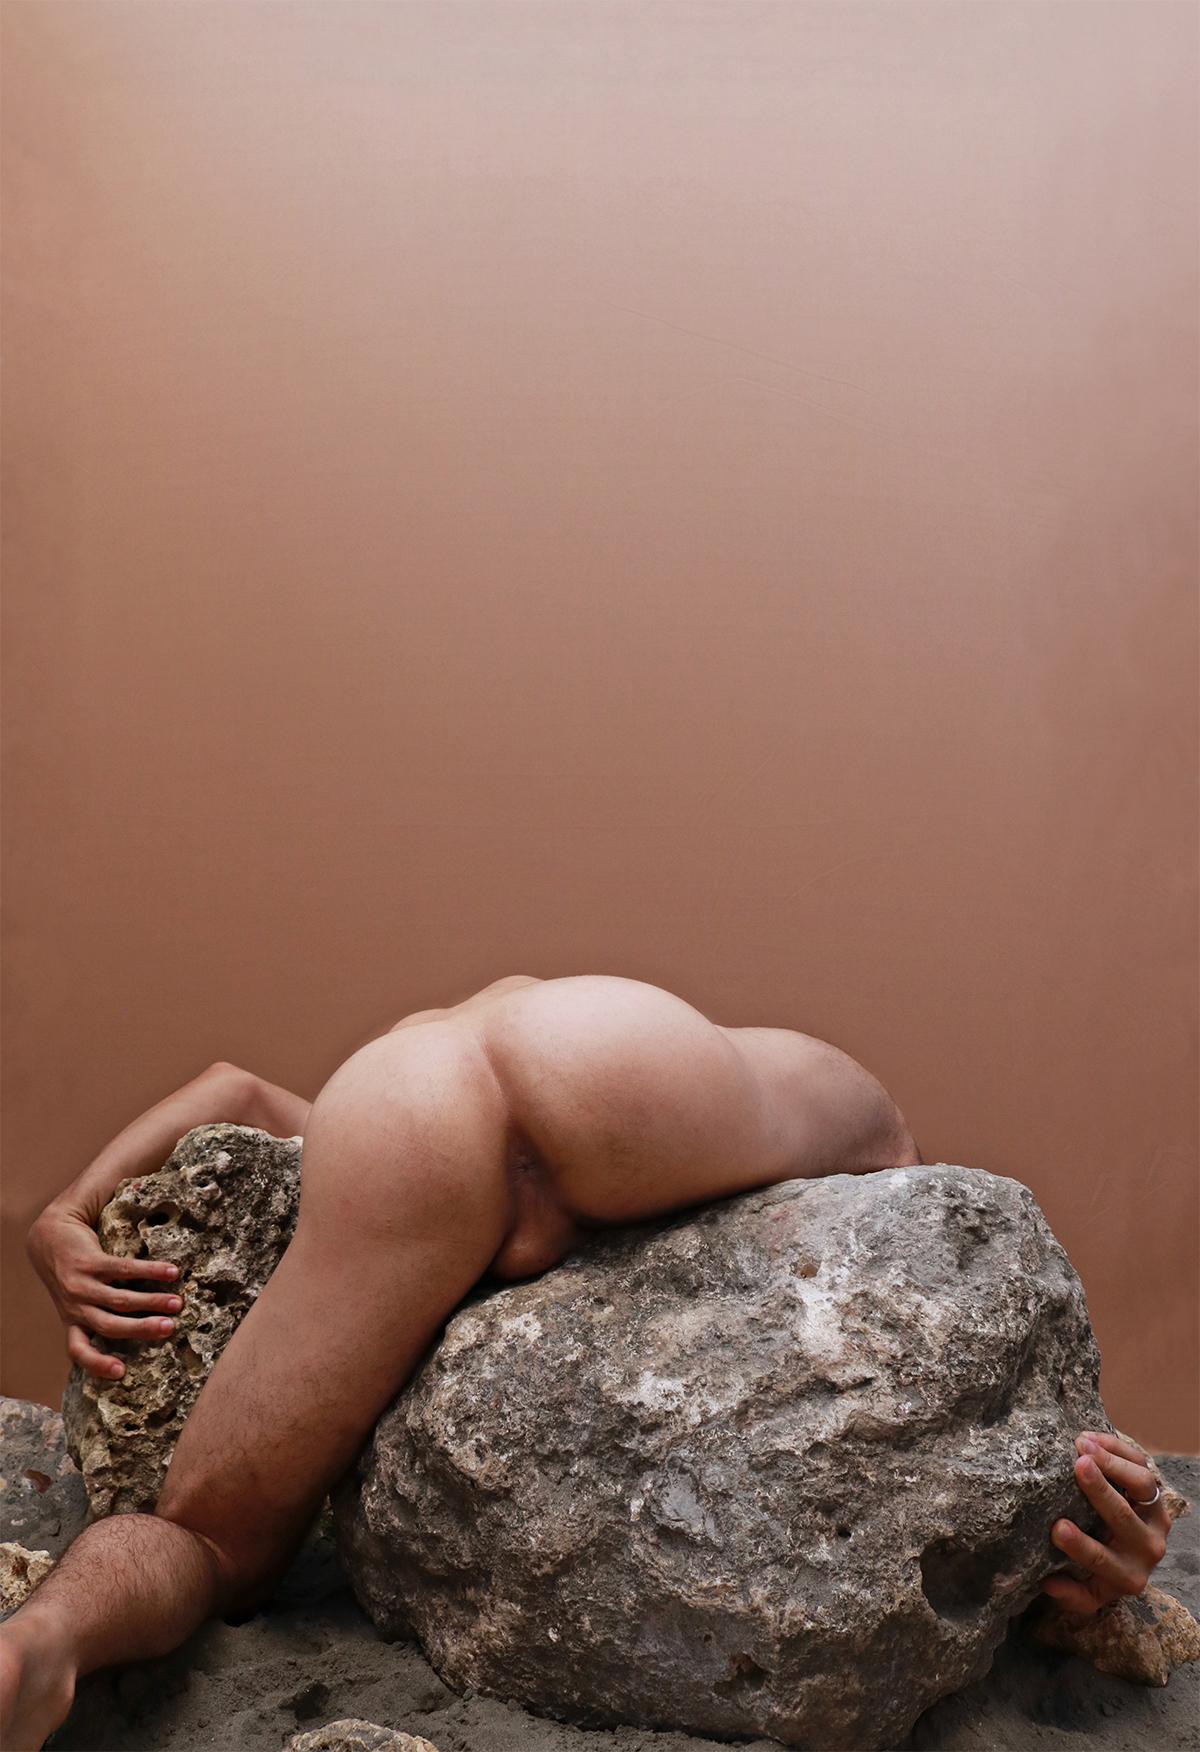 Jose Sierra Nude Photograph - Self Portrait #5 From La Piedra Sustituta II Series. Limited edition color photo